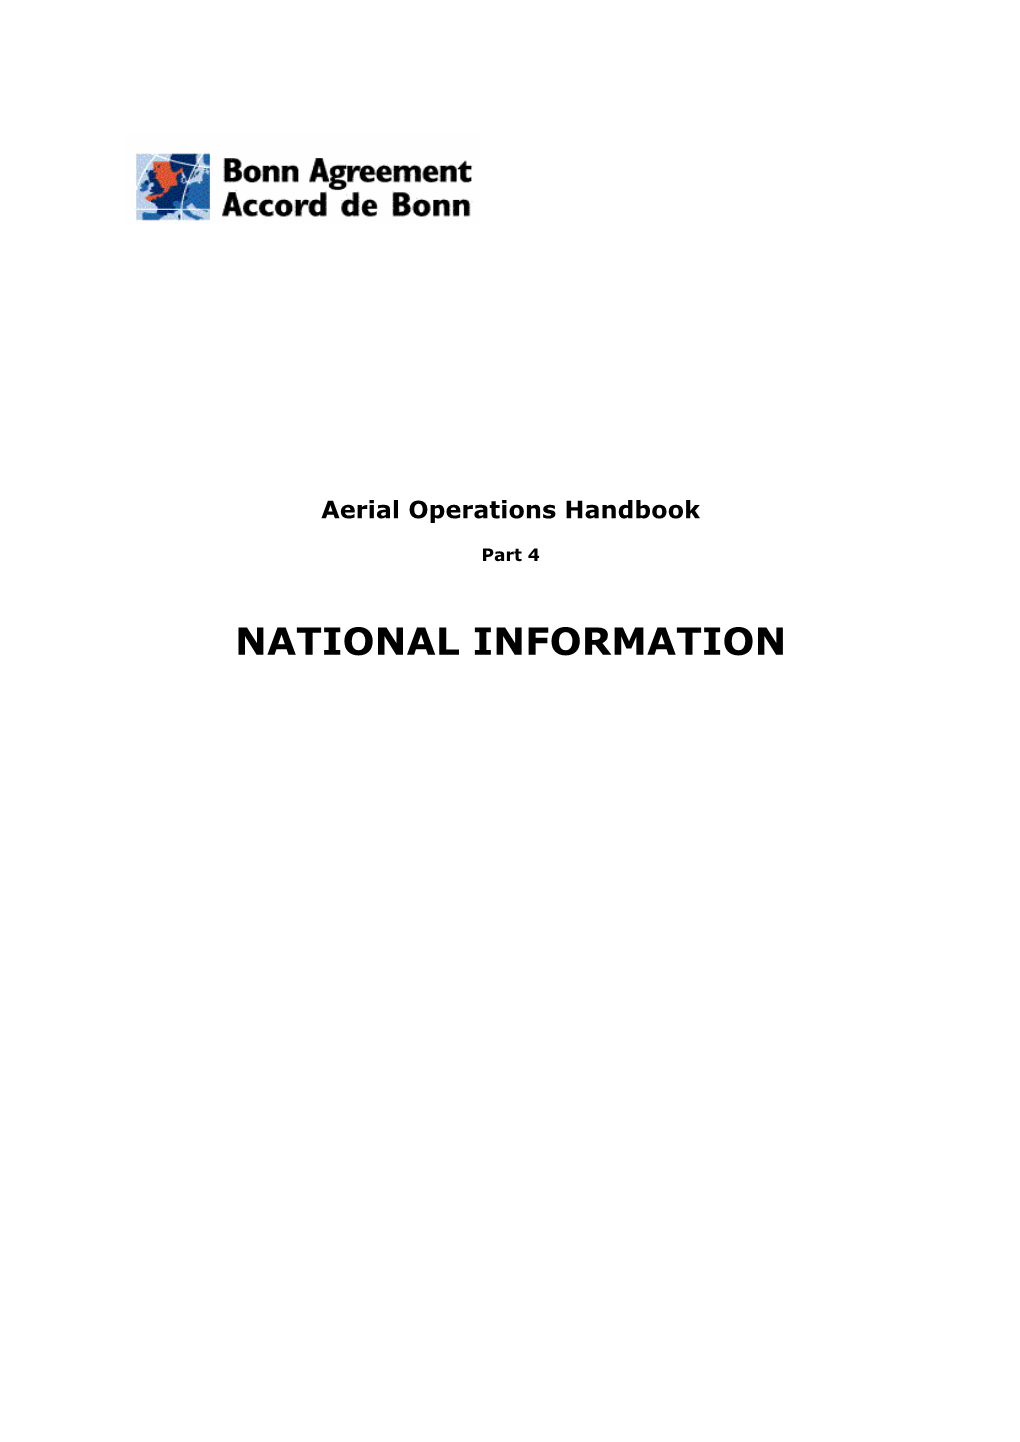 Aerial Observations Handbook Part IV- National Information